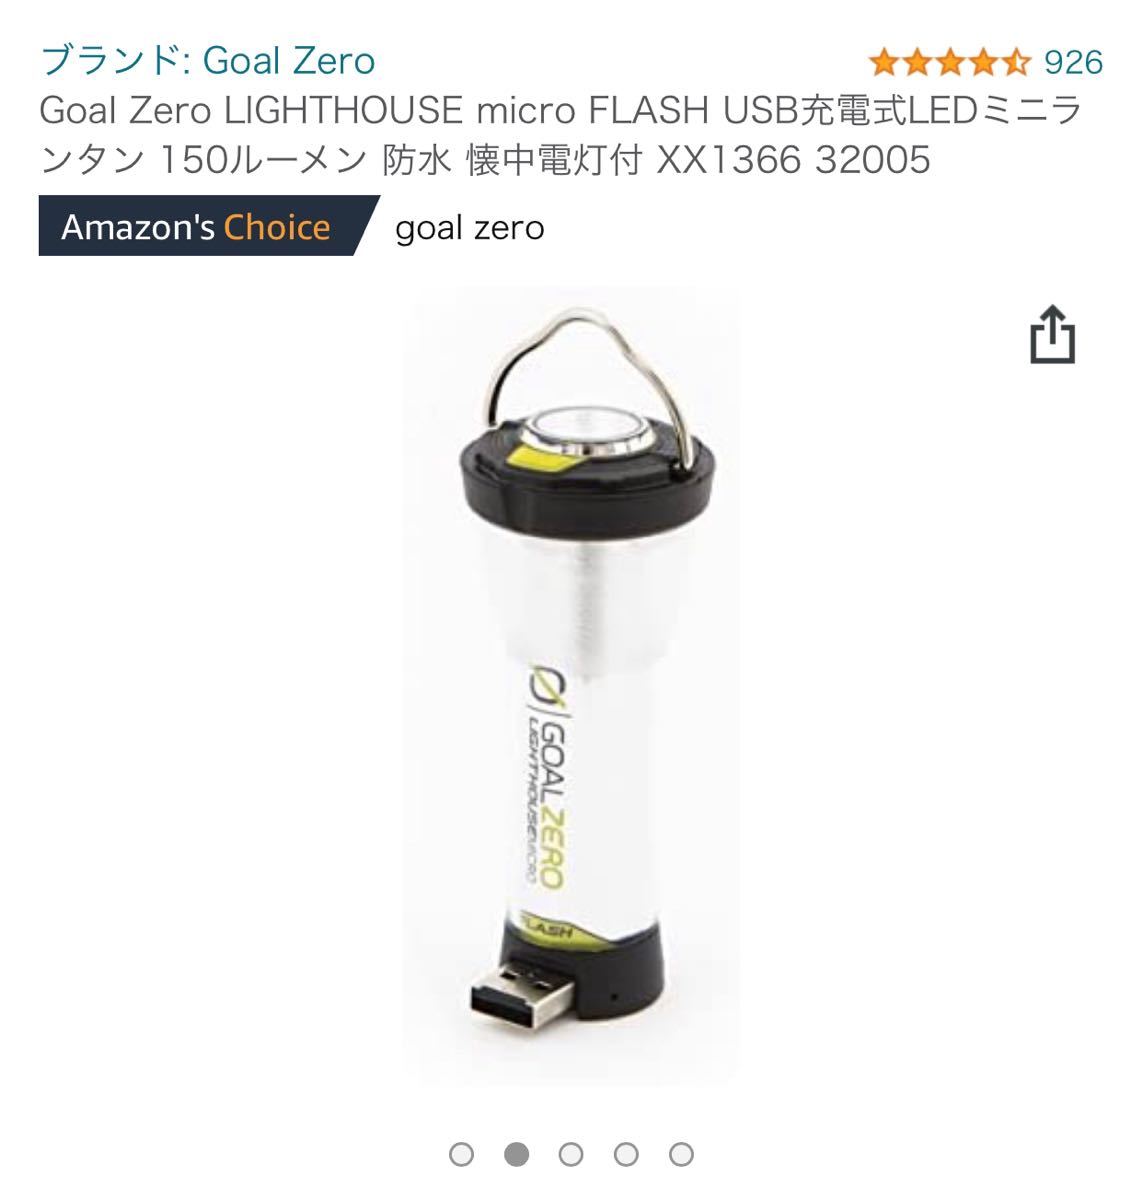 Goal Zero LIGHTHOUSE USB充電式LEDミニランタン 防水 懐中電灯付 XX1366 32005